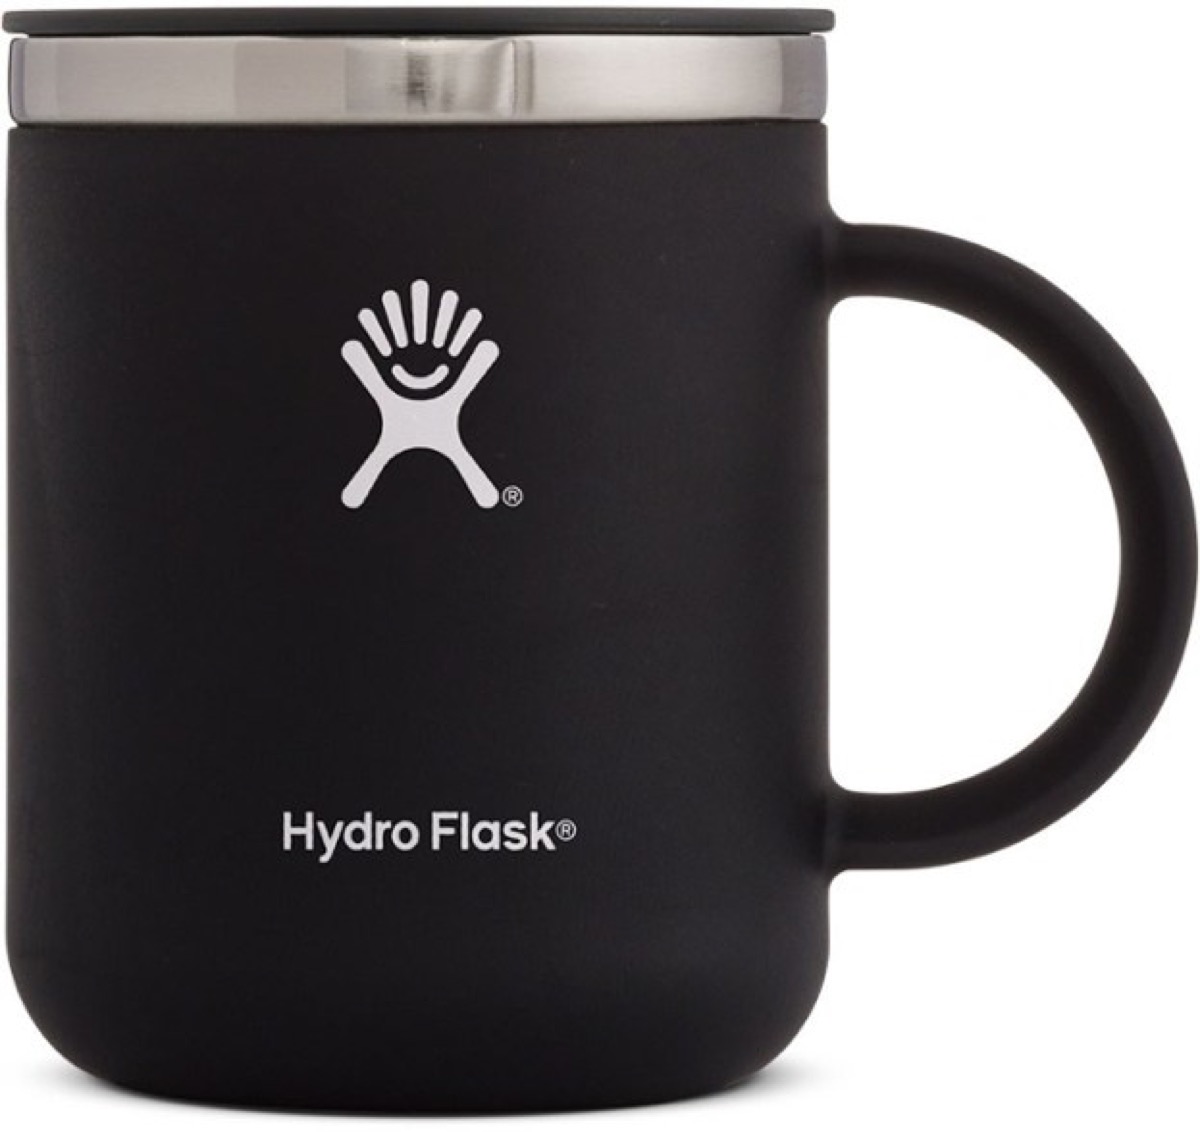 Hydroflask Mug {Valentine's Day Gifts}